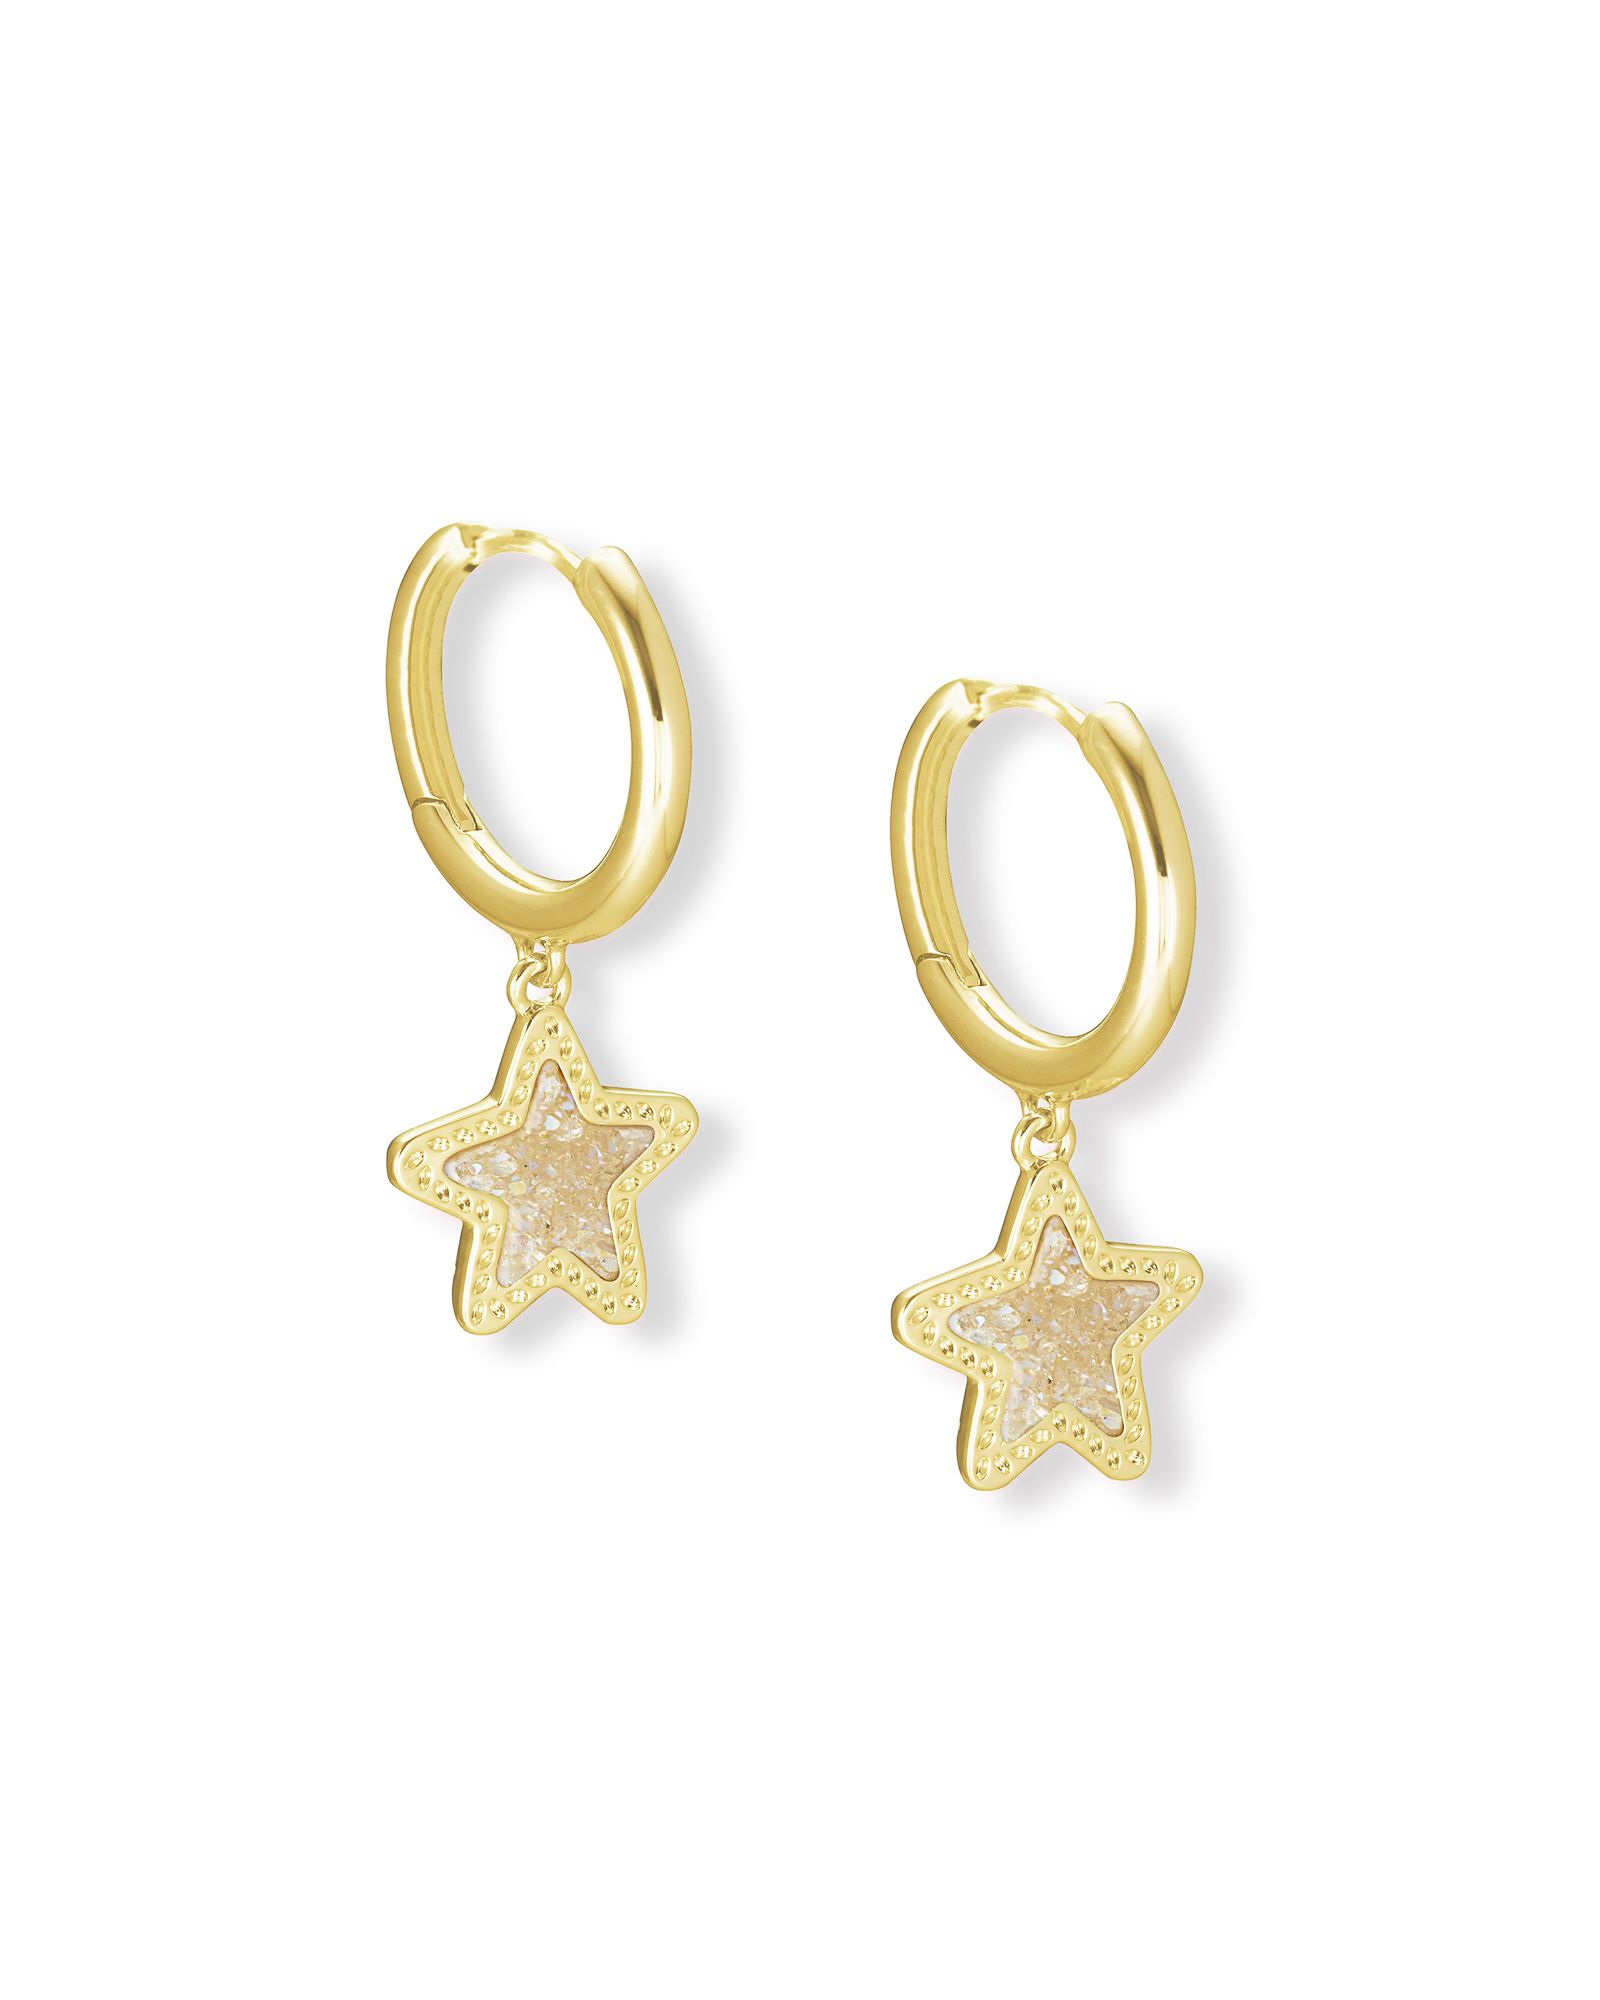 Jae Star Gold Huggie Earrings in Iridescent Drusy | Kendra Scott